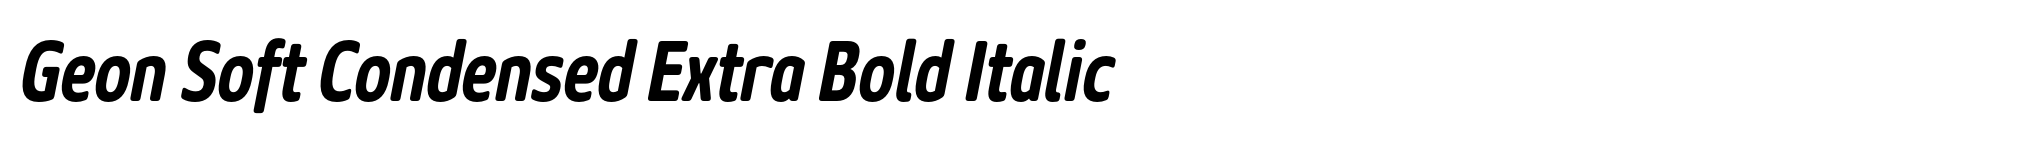 Geon Soft Condensed Extra Bold Italic image